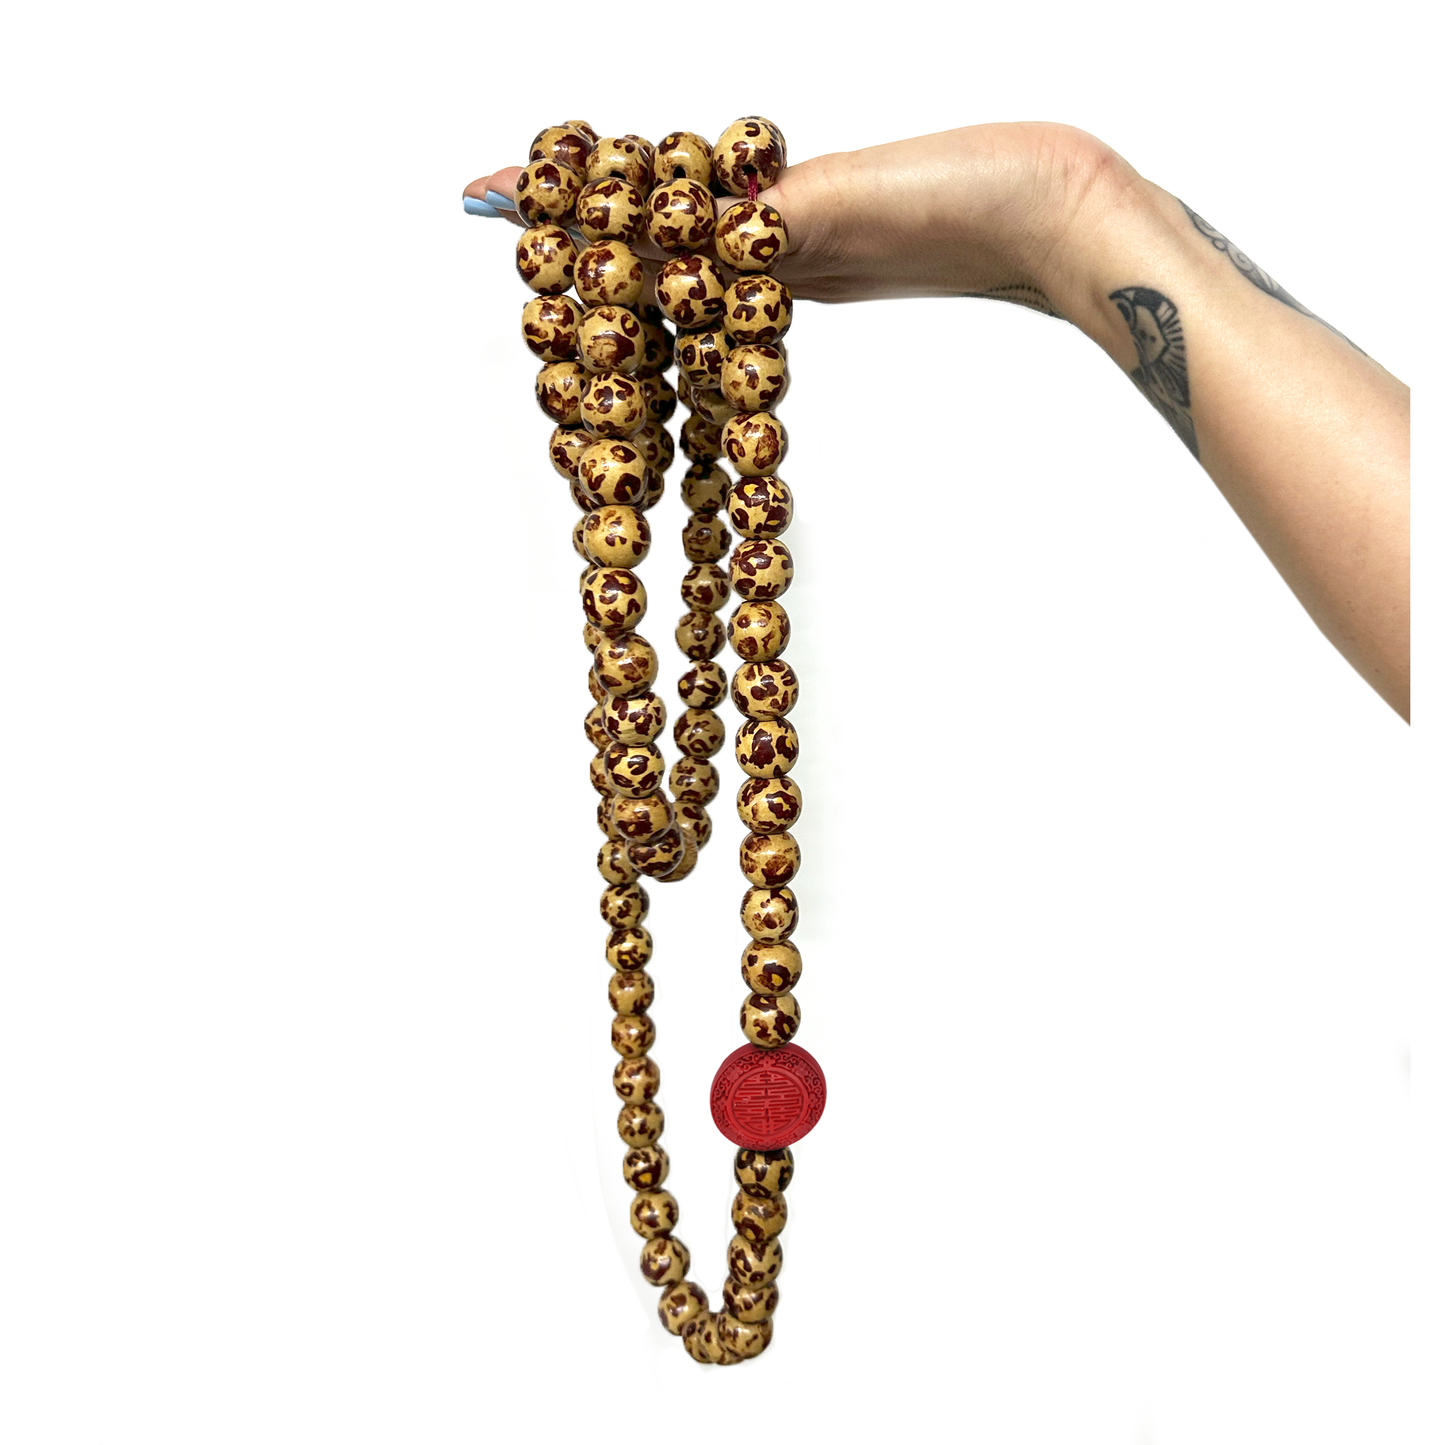 Samsara Tibetan necklace 7 Ordonic chakra with 7 different stones and black lava - Mala Tibetan with 108 grains - religious Buddhist rosary